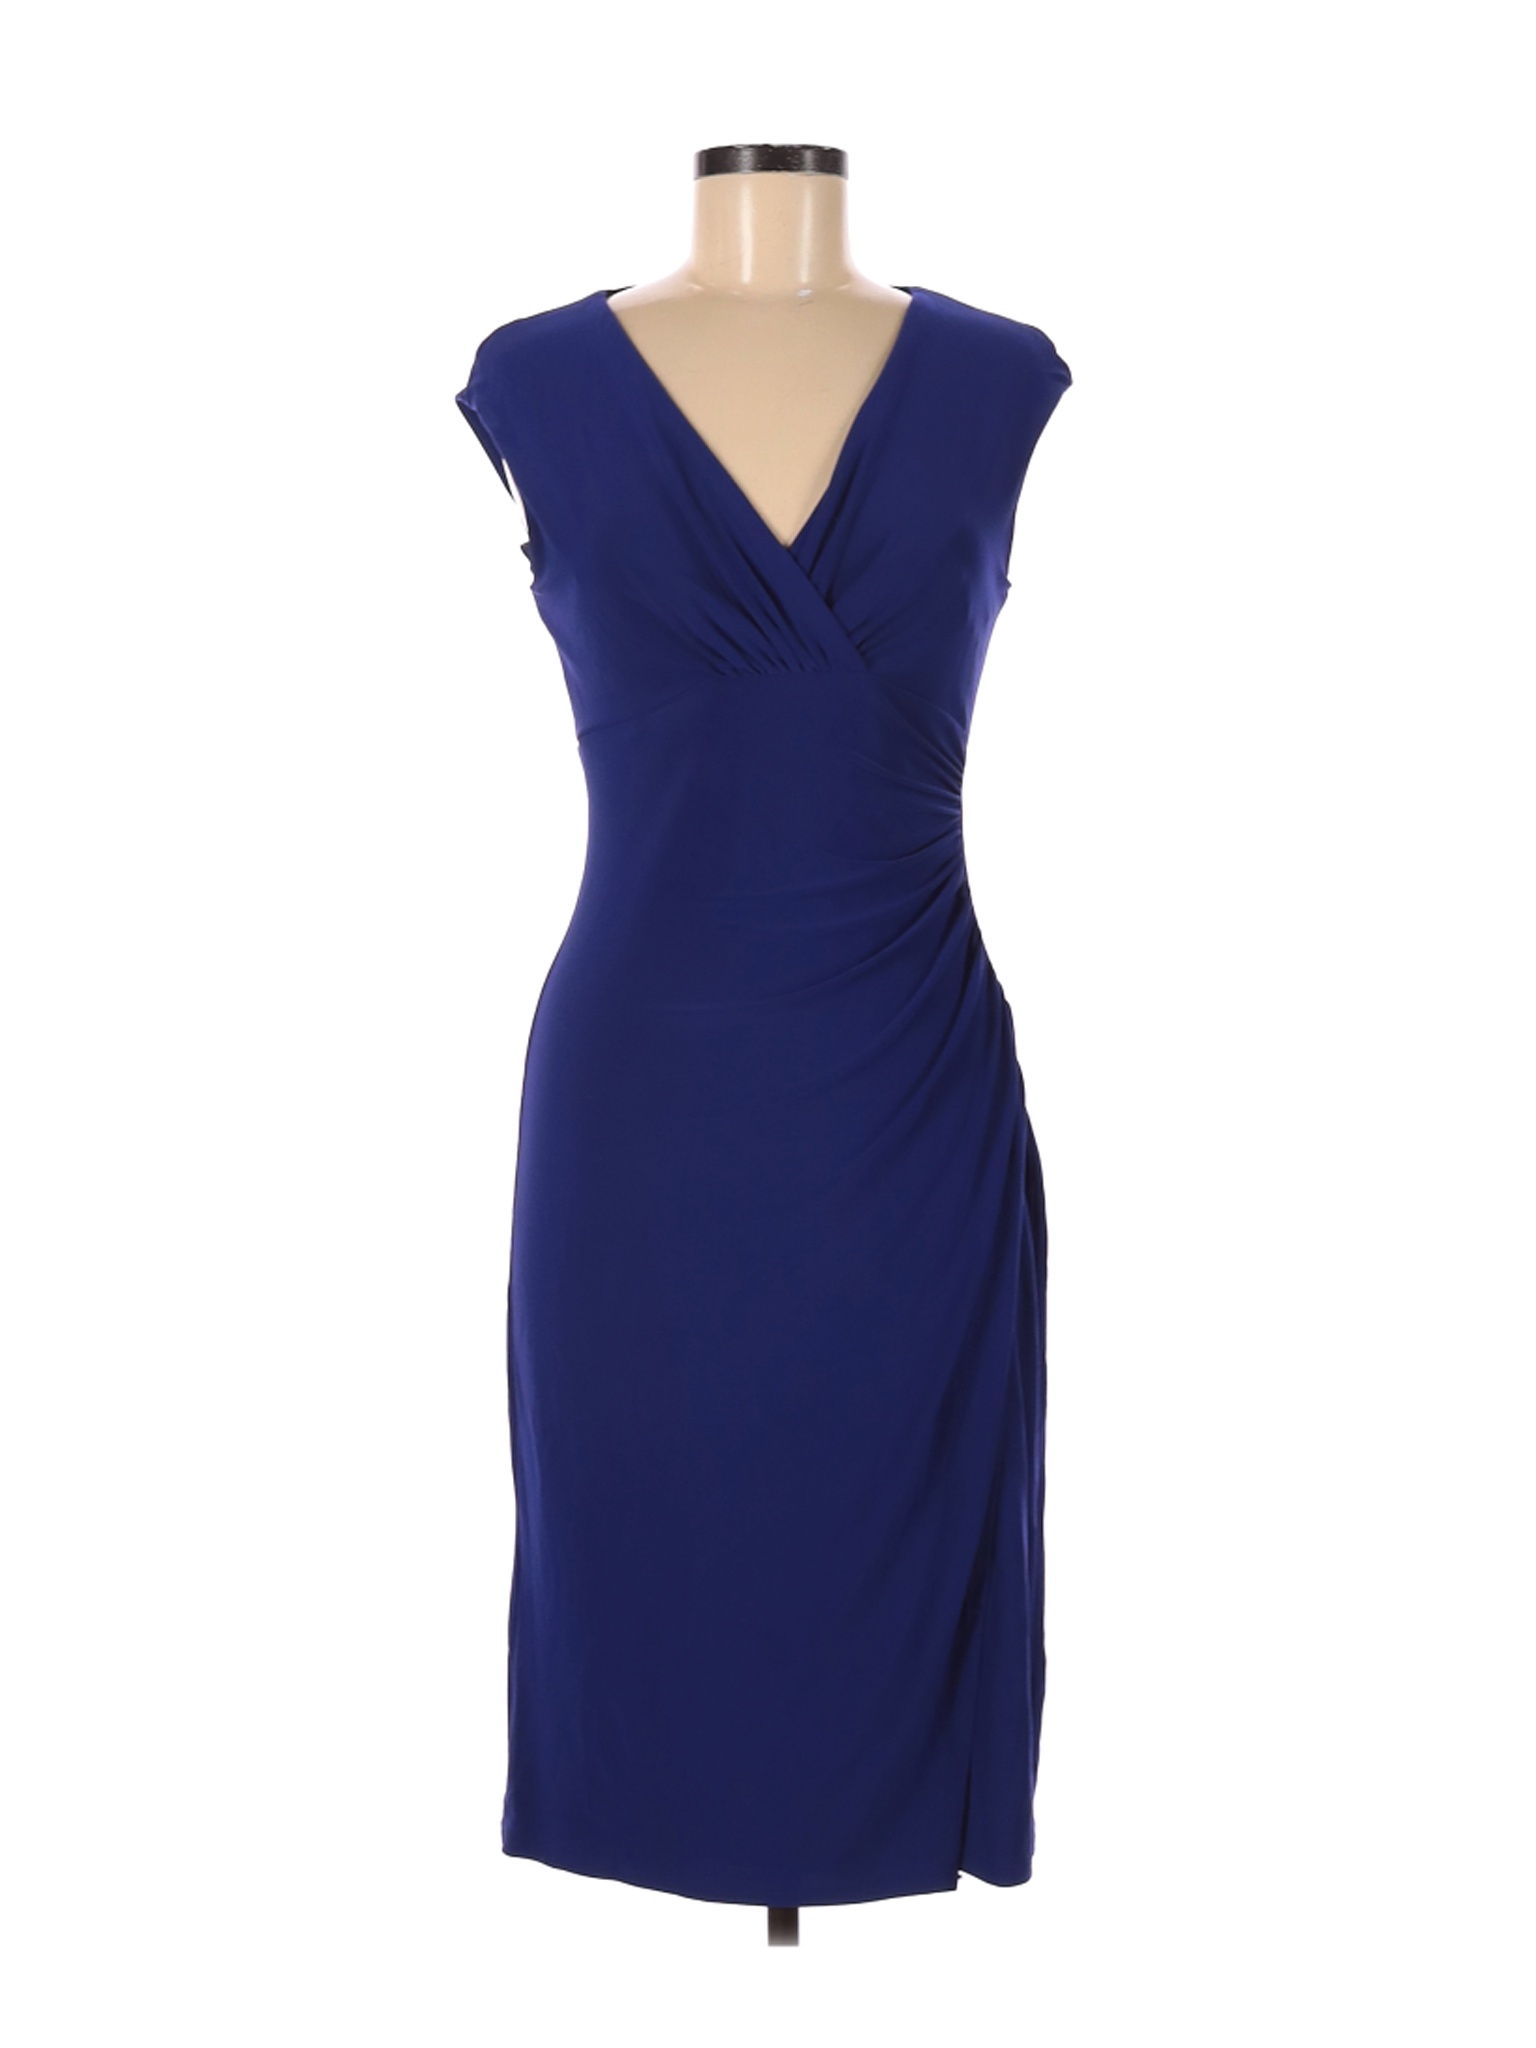 Lauren by Ralph Lauren Women Blue Casual Dress 6 | eBay